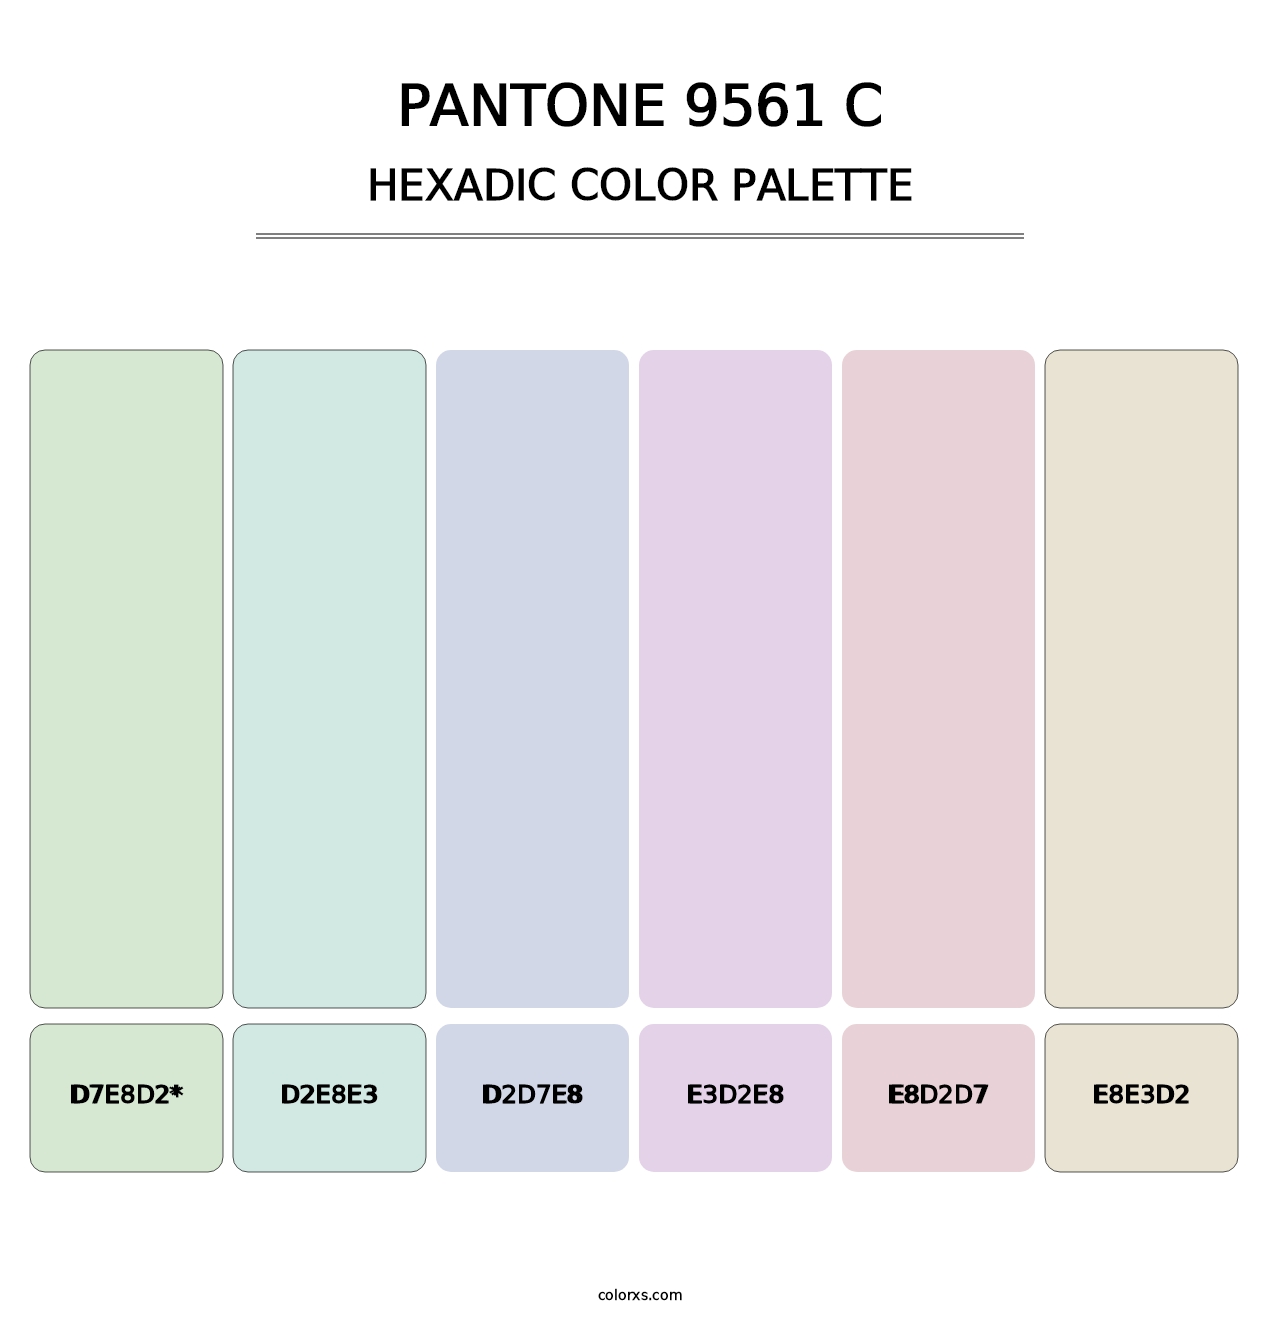 PANTONE 9561 C - Hexadic Color Palette